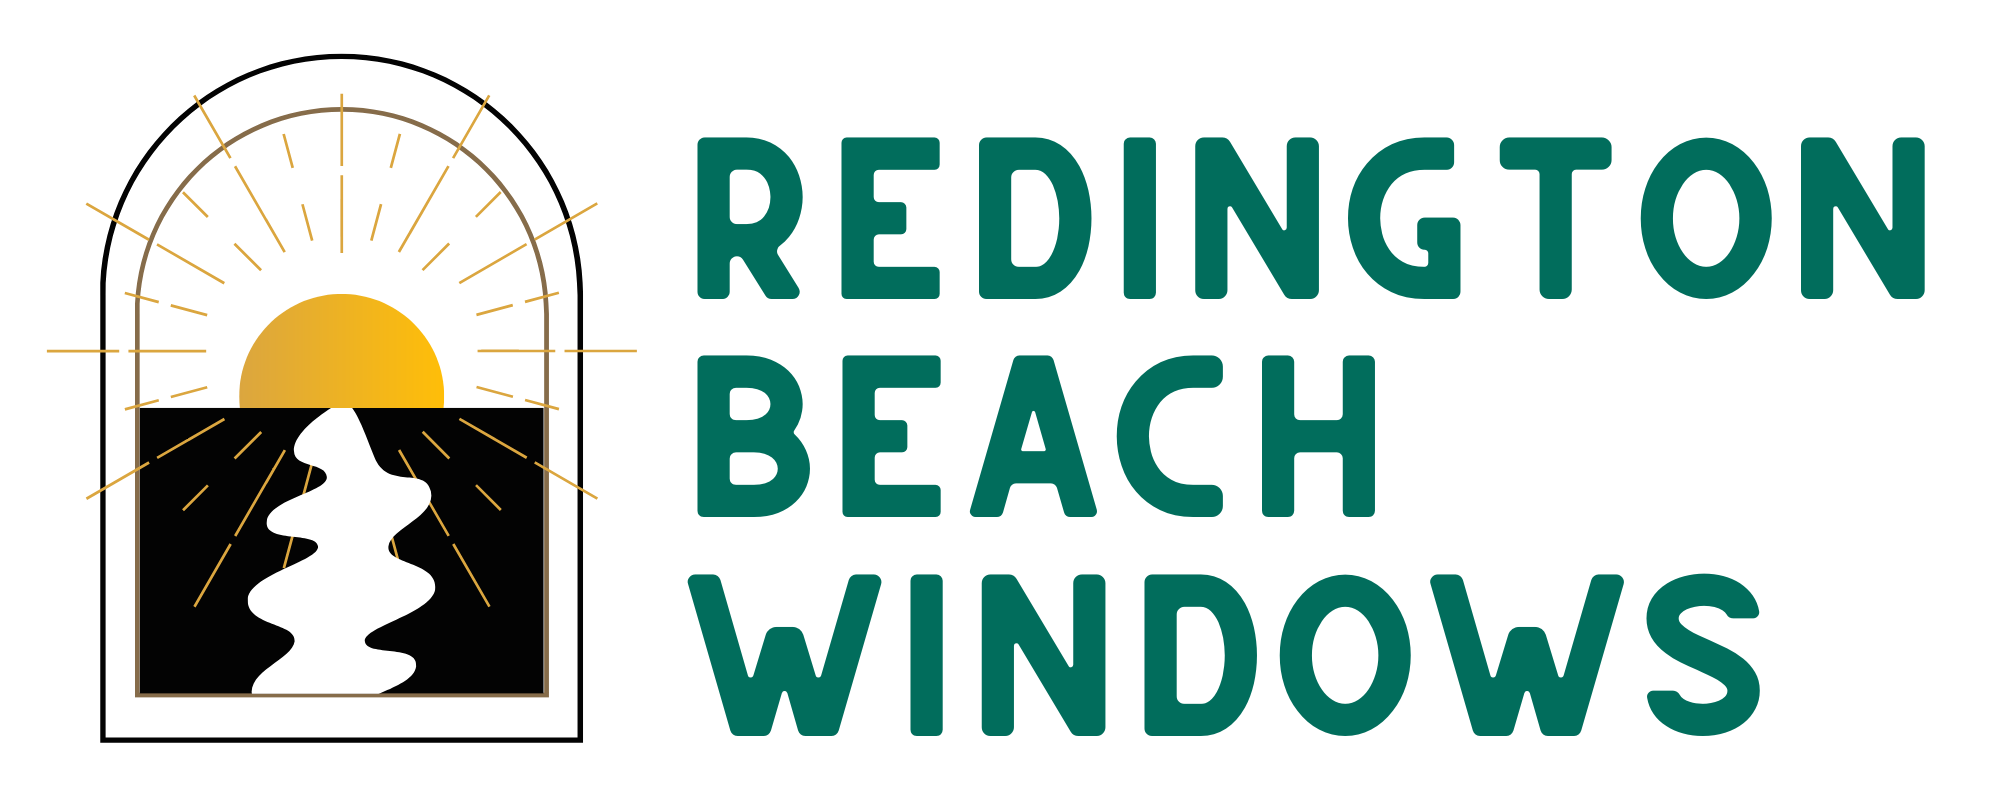 Blog - Redington Beach Windows